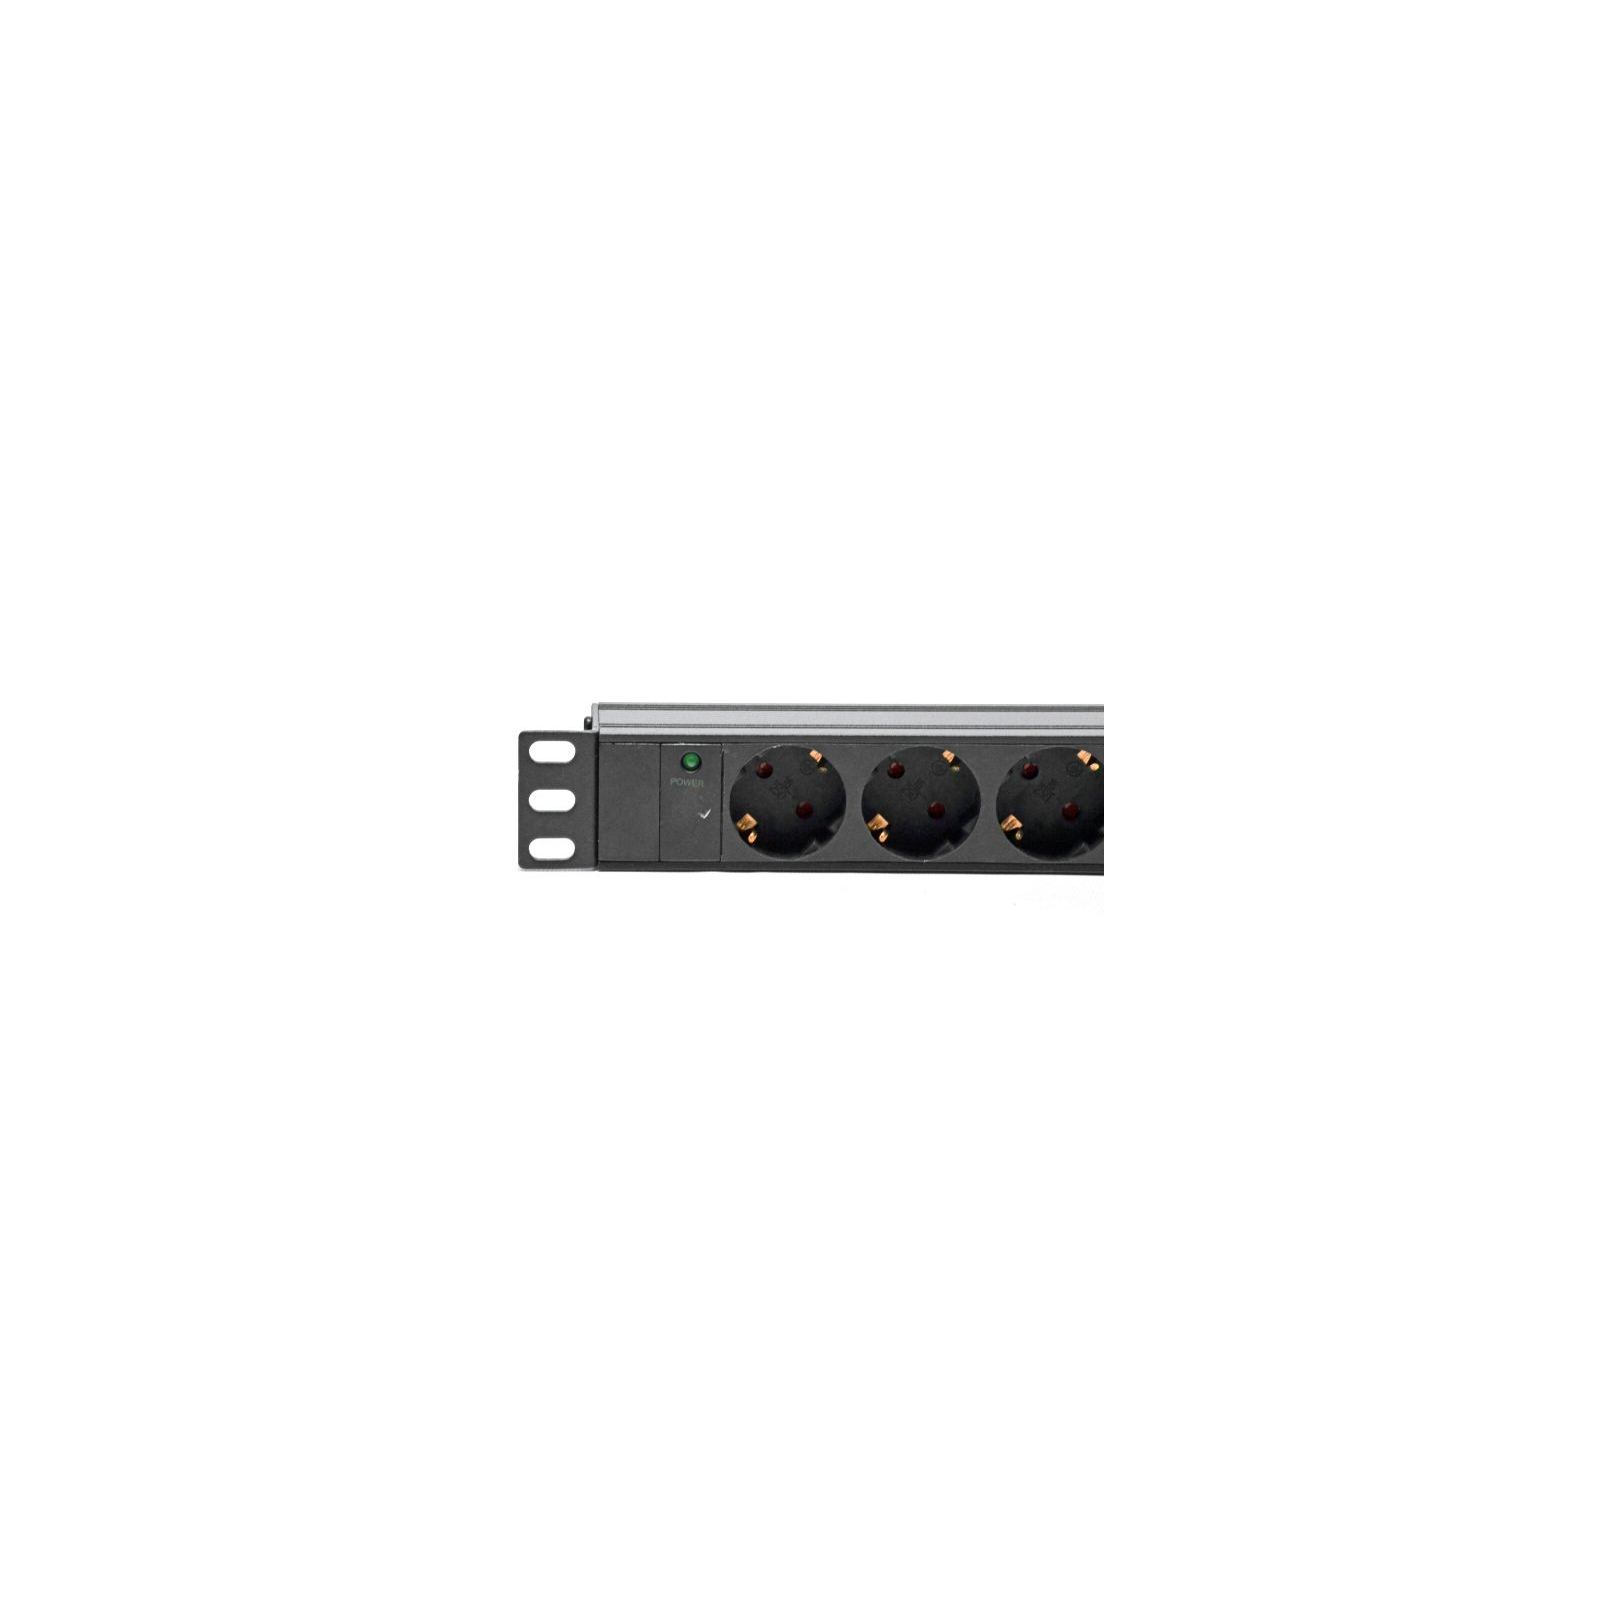 Силовой блок Kingda 19" 1U 9xSchuko, С14, без кабеля (KD-GER(16)N1009WKPB19A-C14) изображение 2